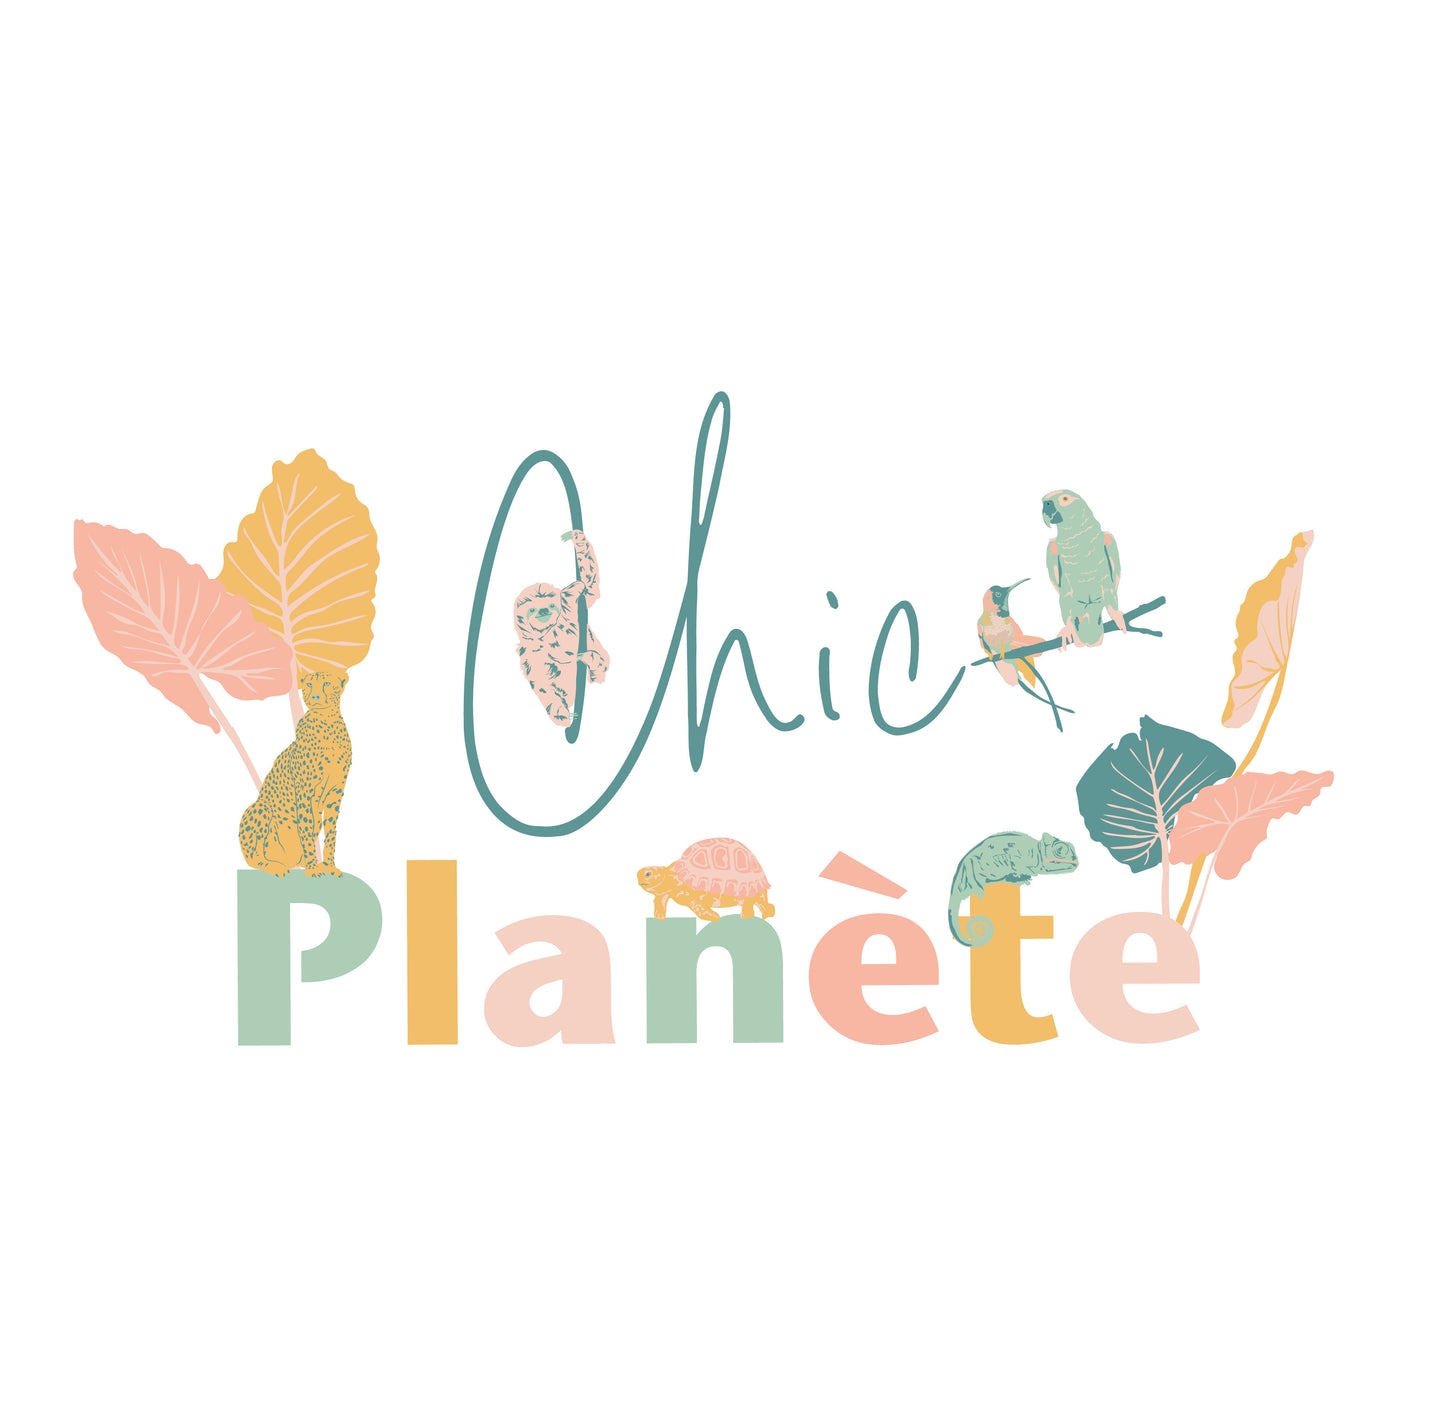 Chic planète woman tee-shirt